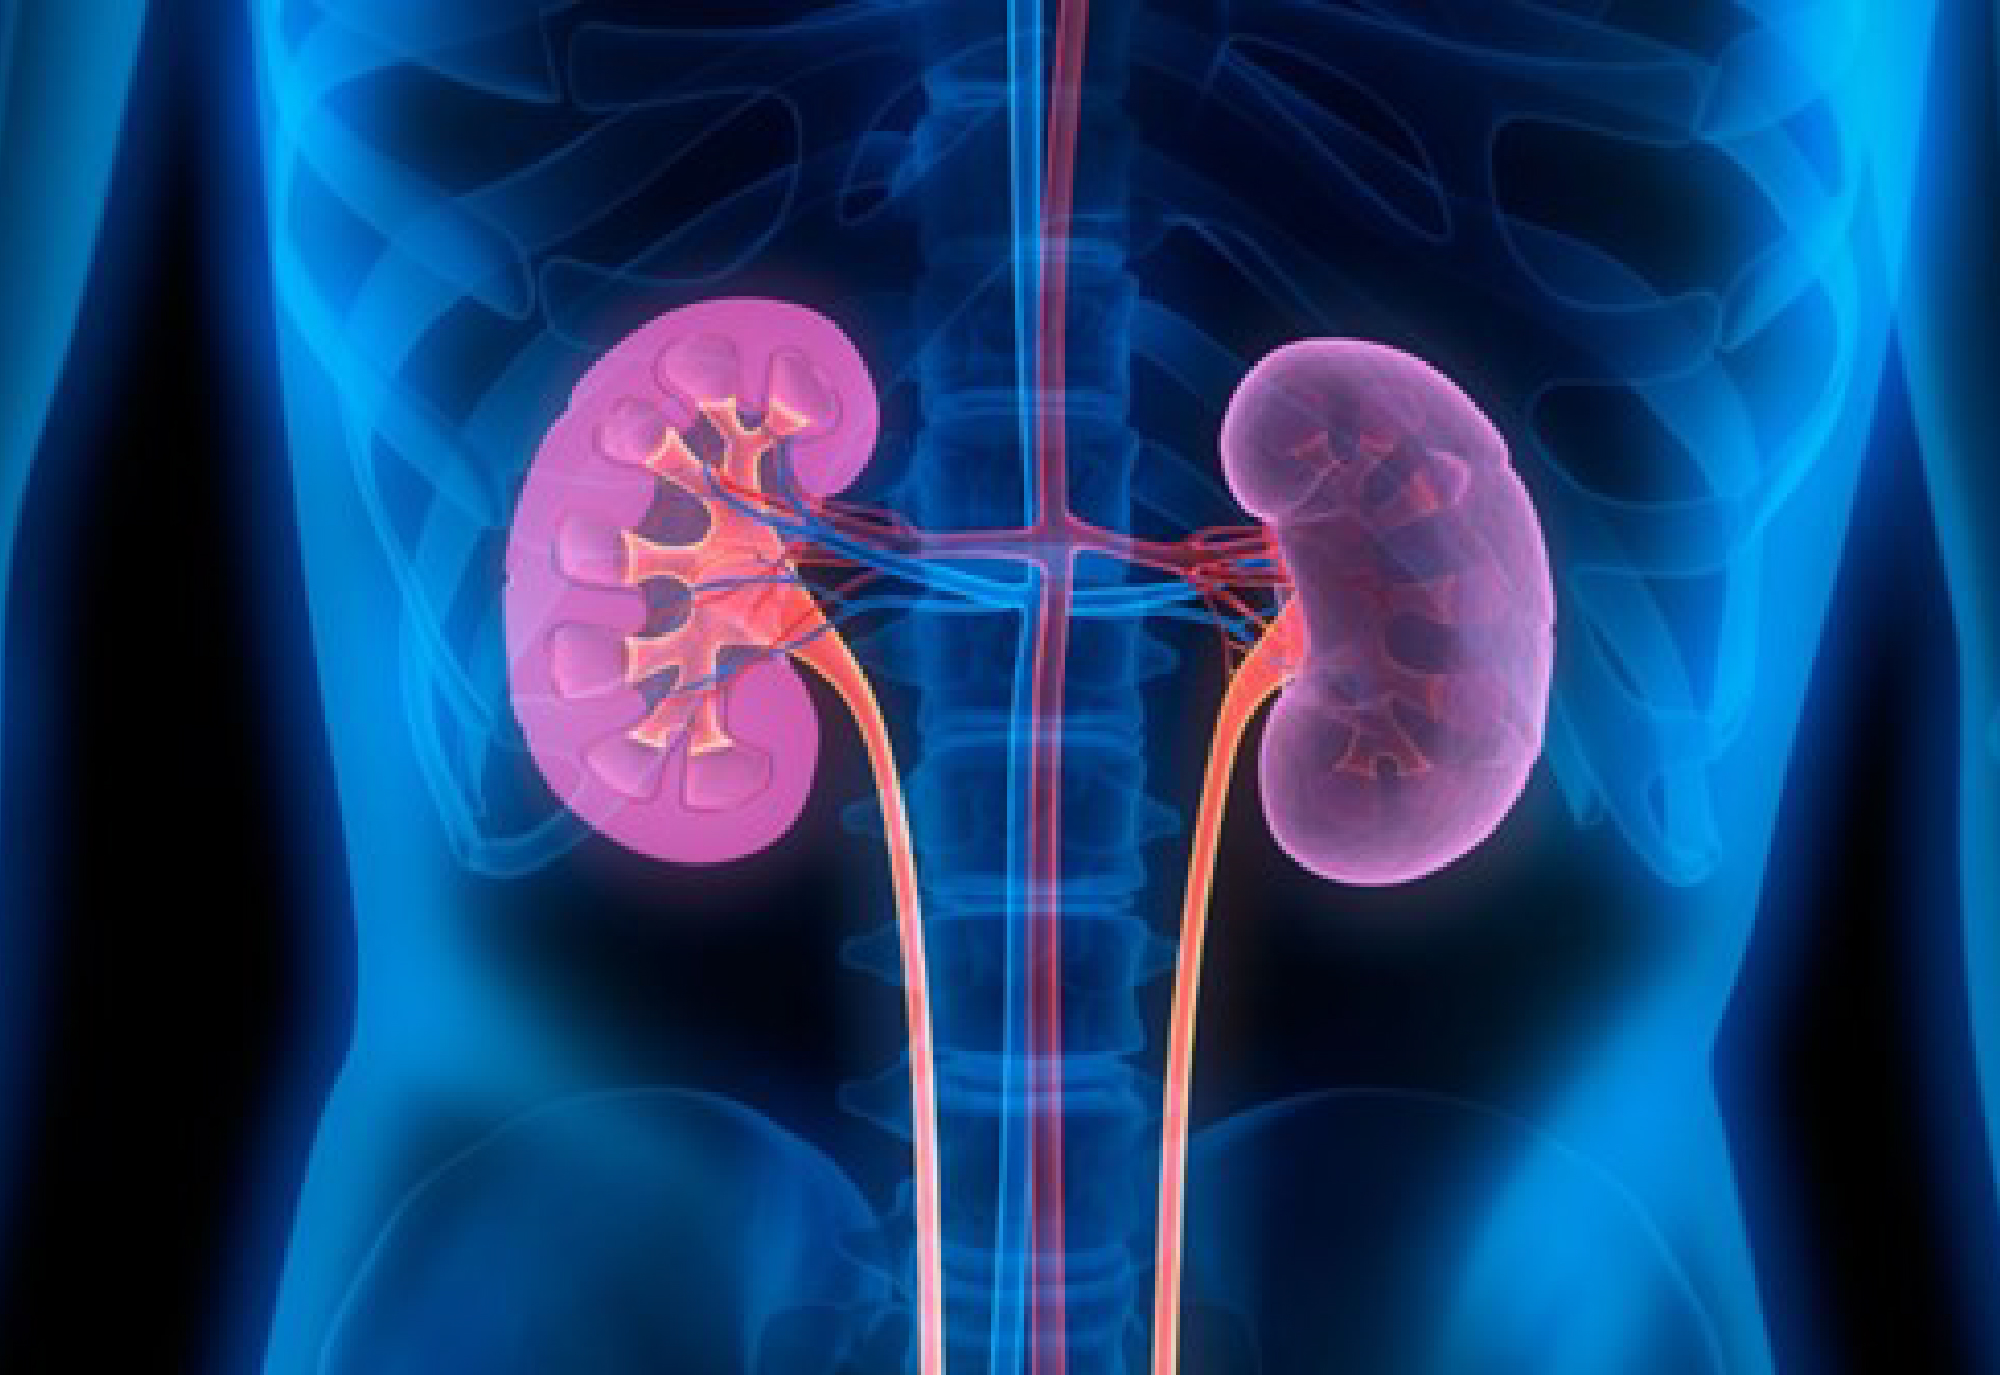 Abnormal lactate metabolism linked to kidney injury in diabetic patients